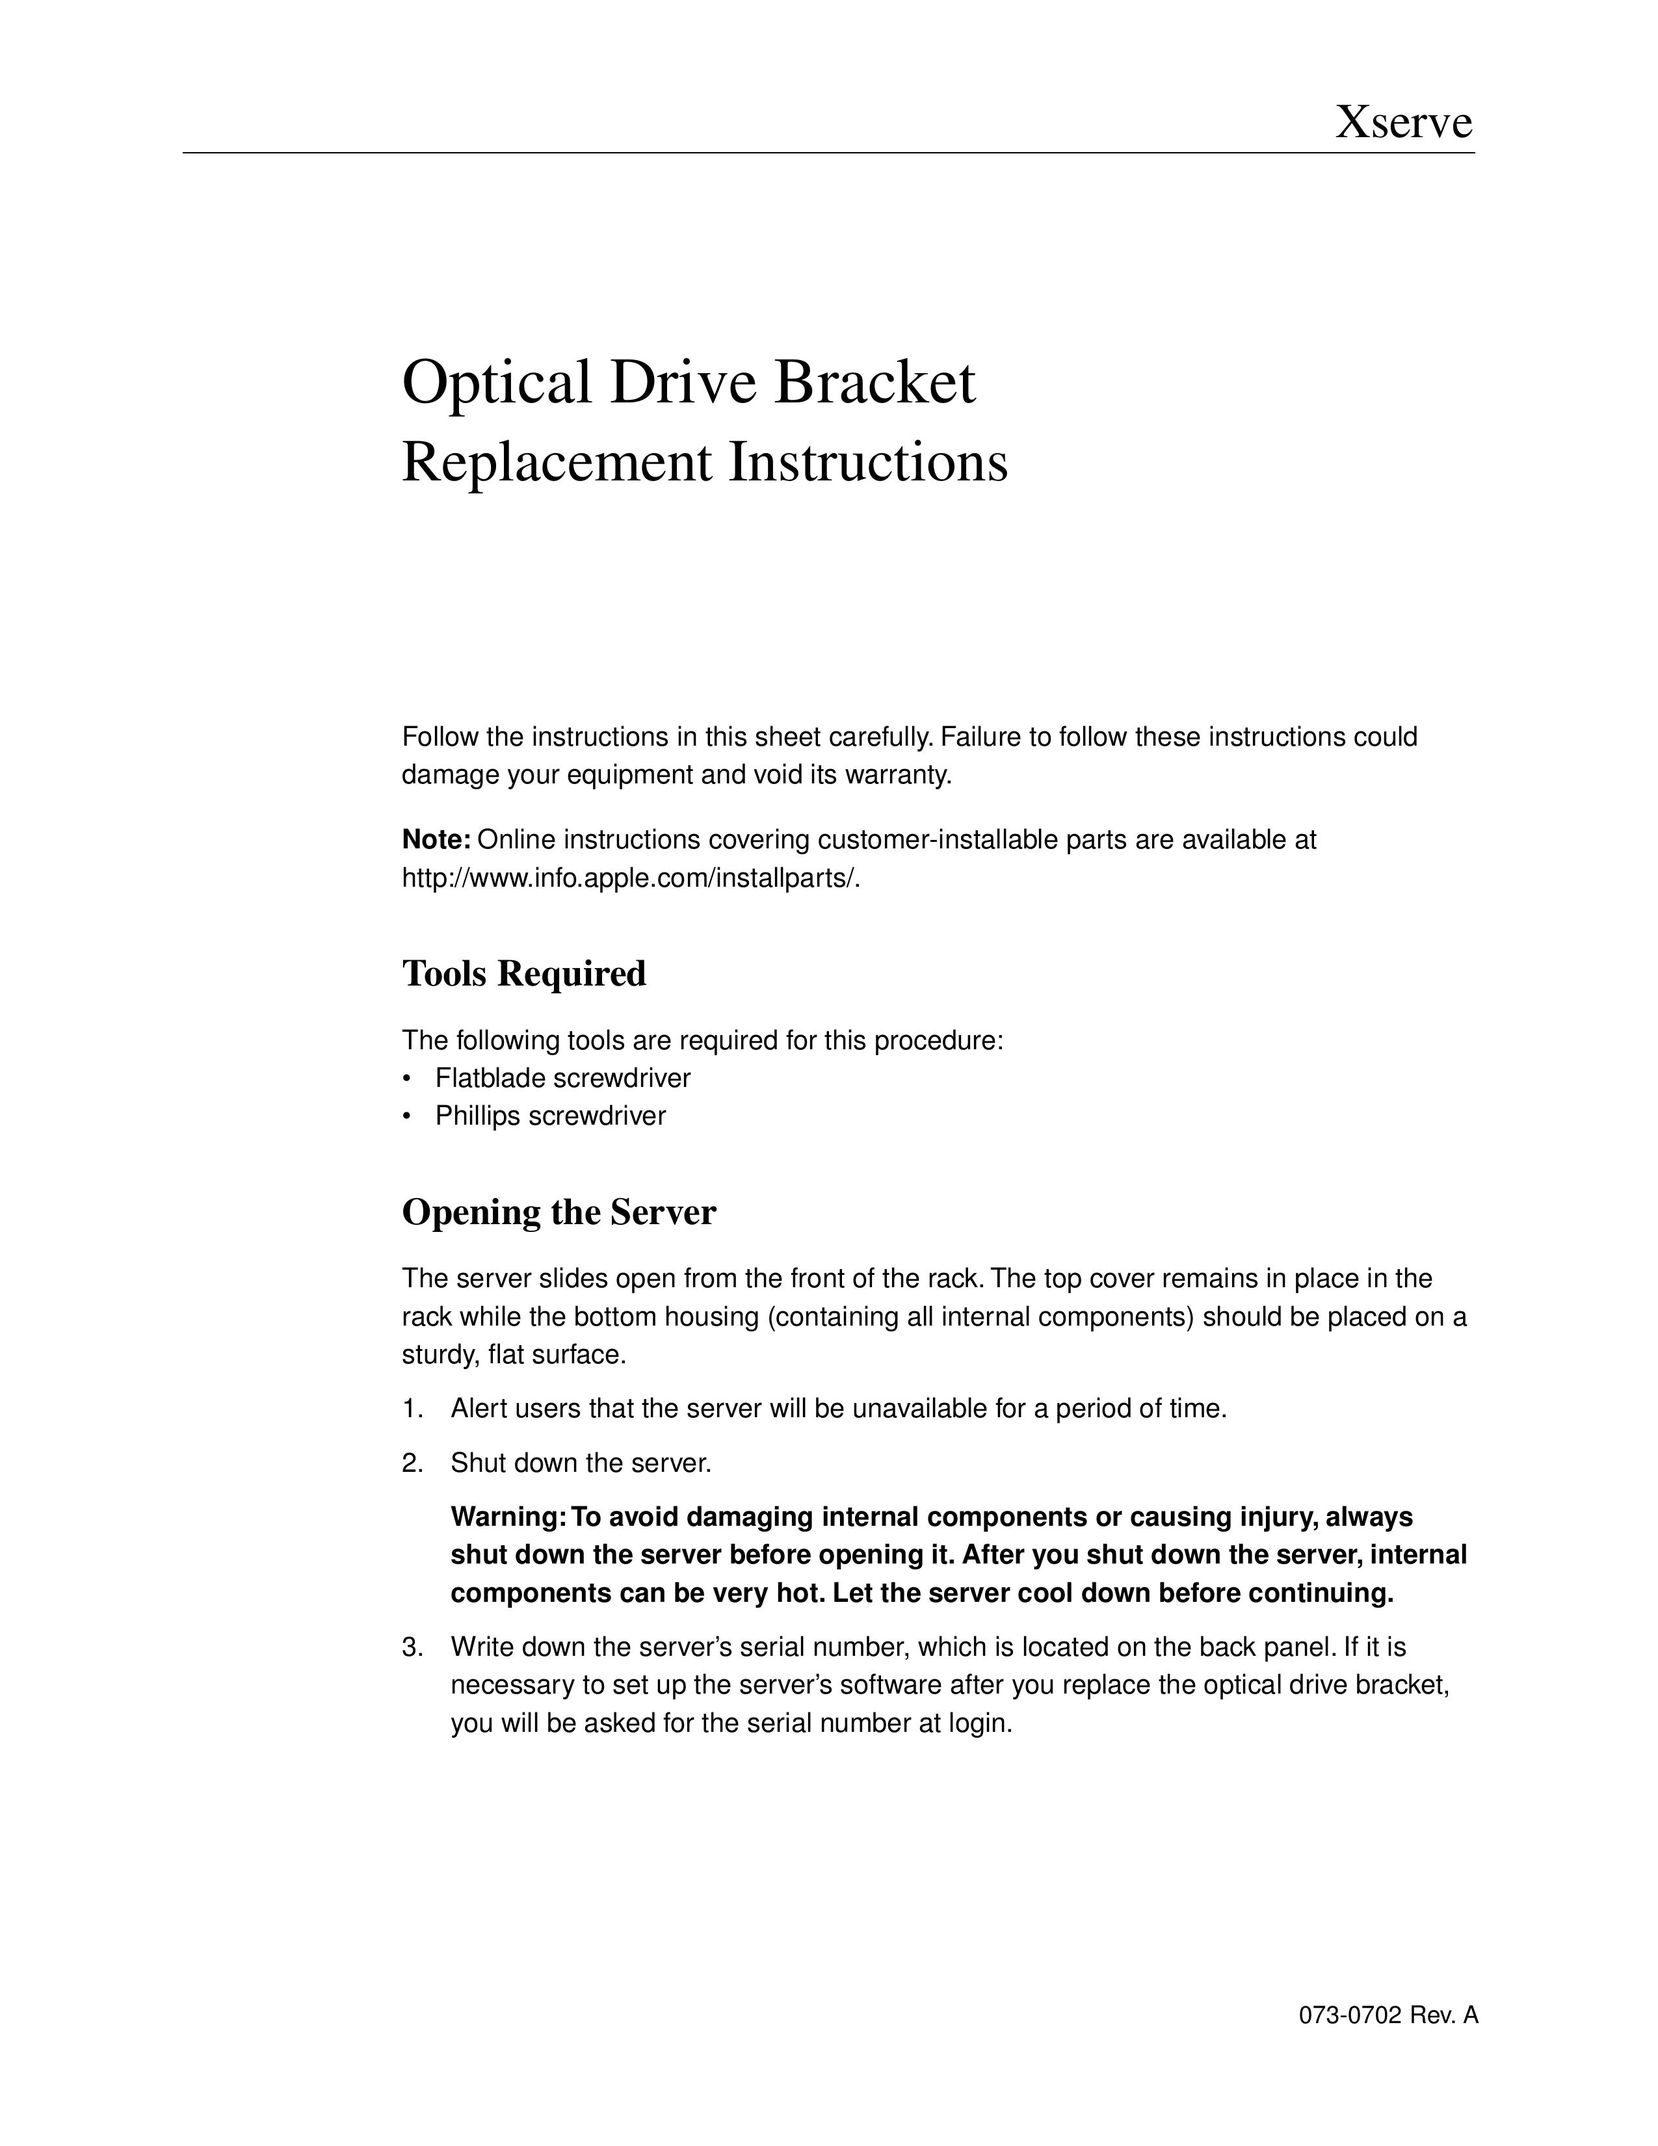 Apple Optical Drive Bracket Computer Hardware User Manual